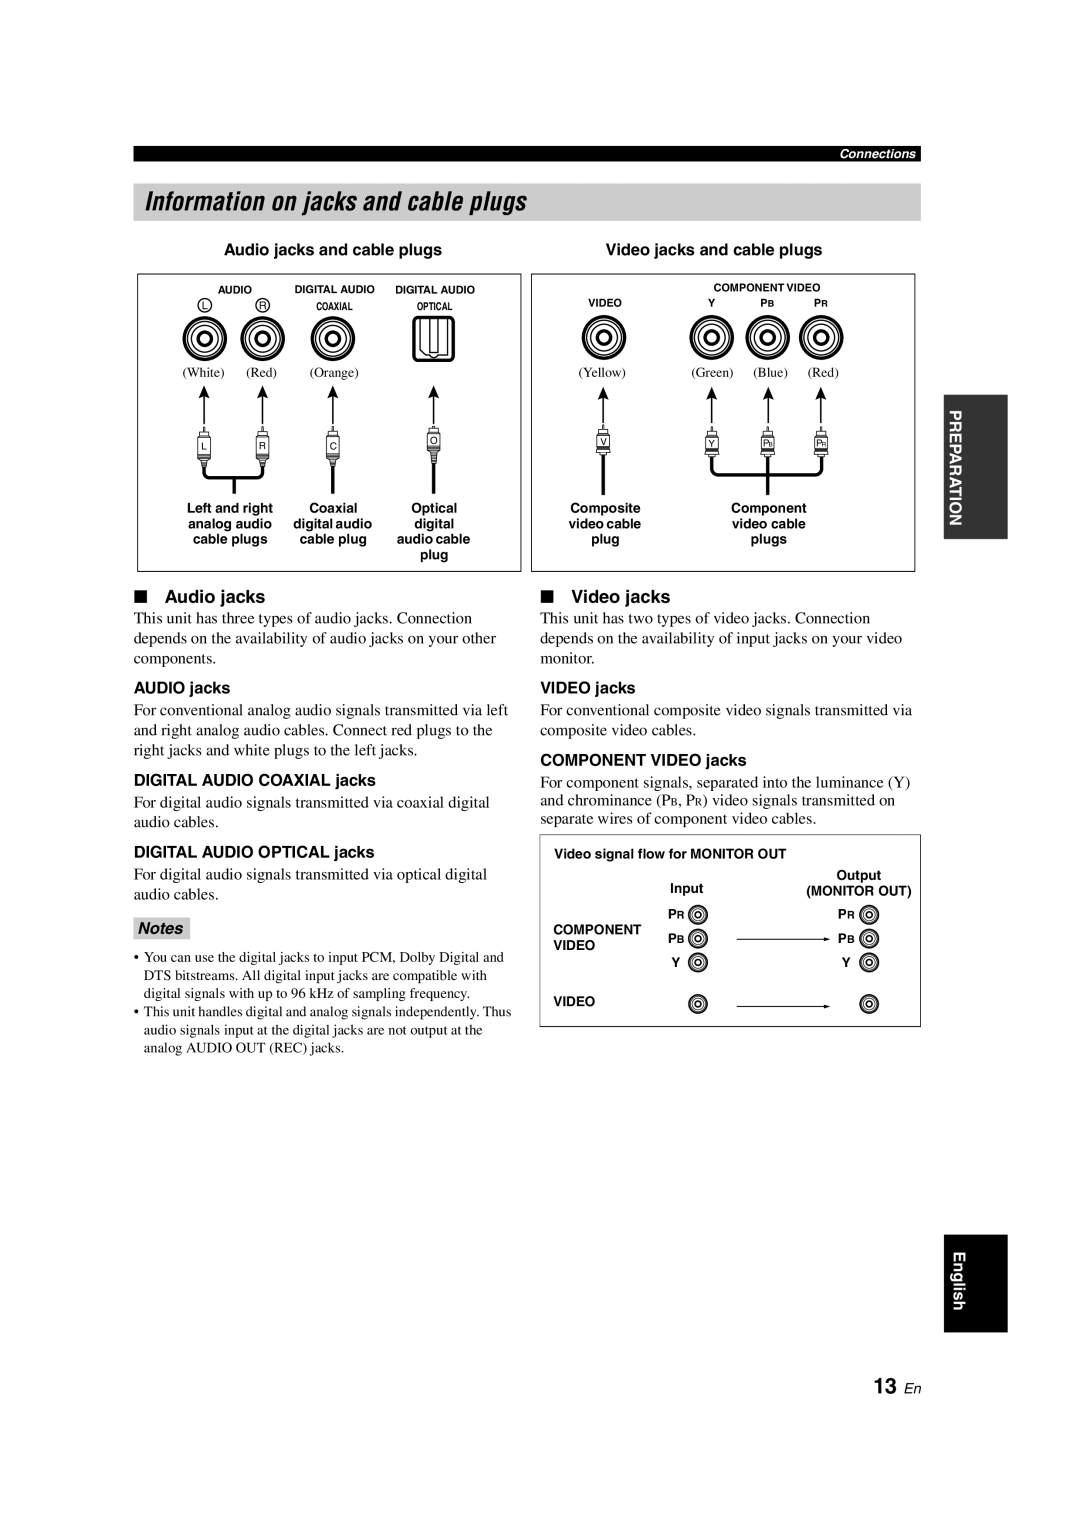 Yamaha HTR-6130 owner manual Information on jacks and cable plugs, 13 En, Audio jacks, Video jacks 